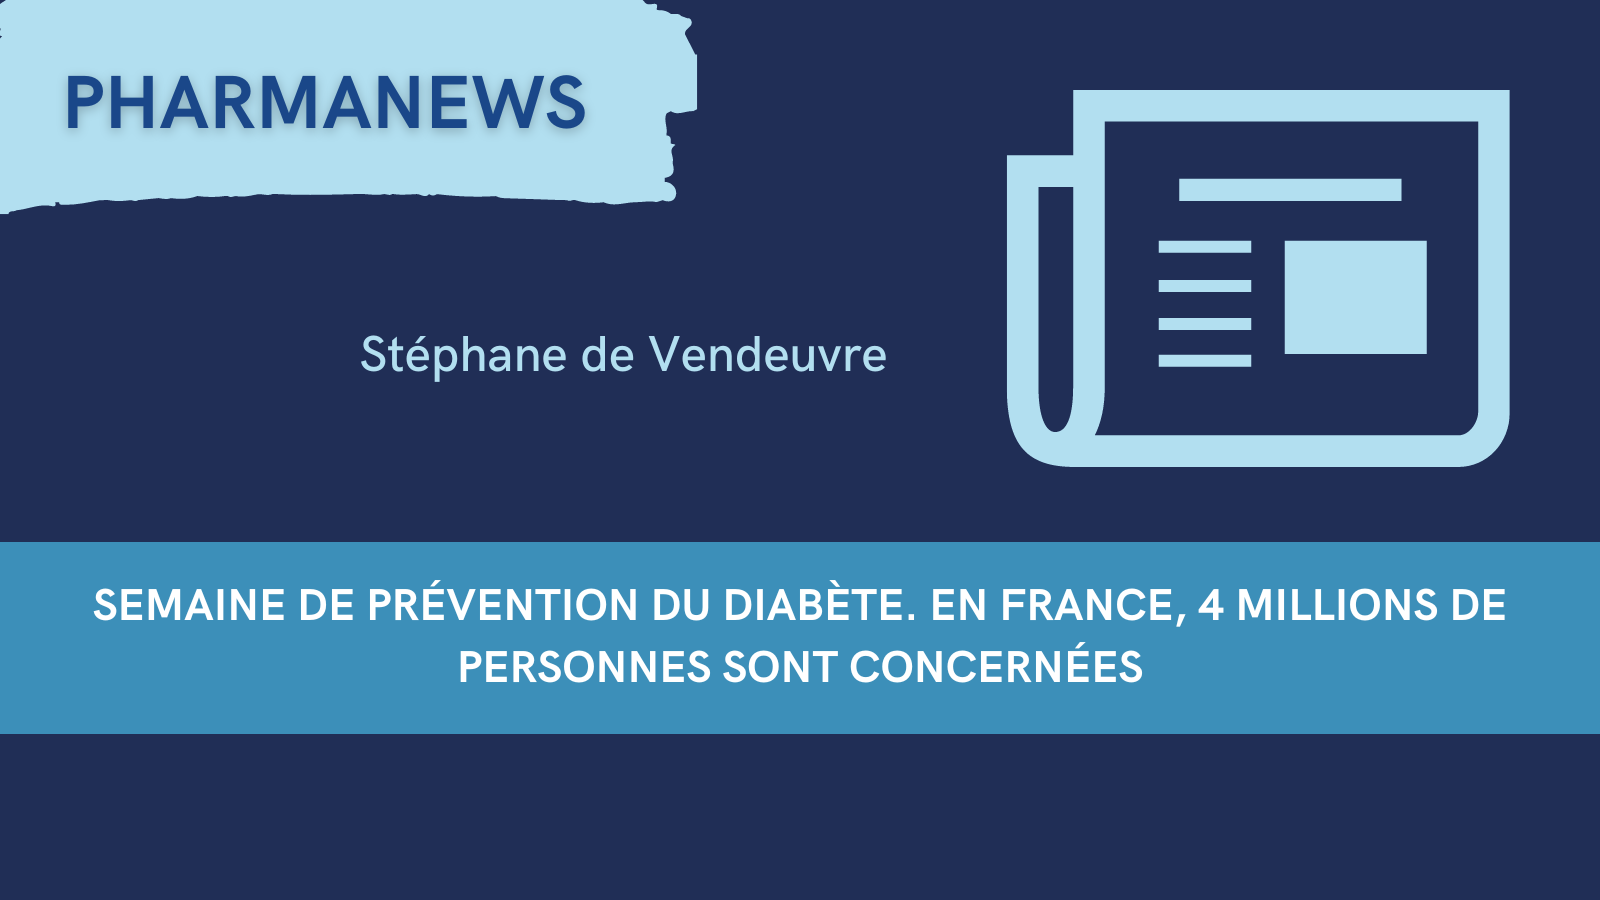 Les Pharmanews de Stephane de Vendeuvre